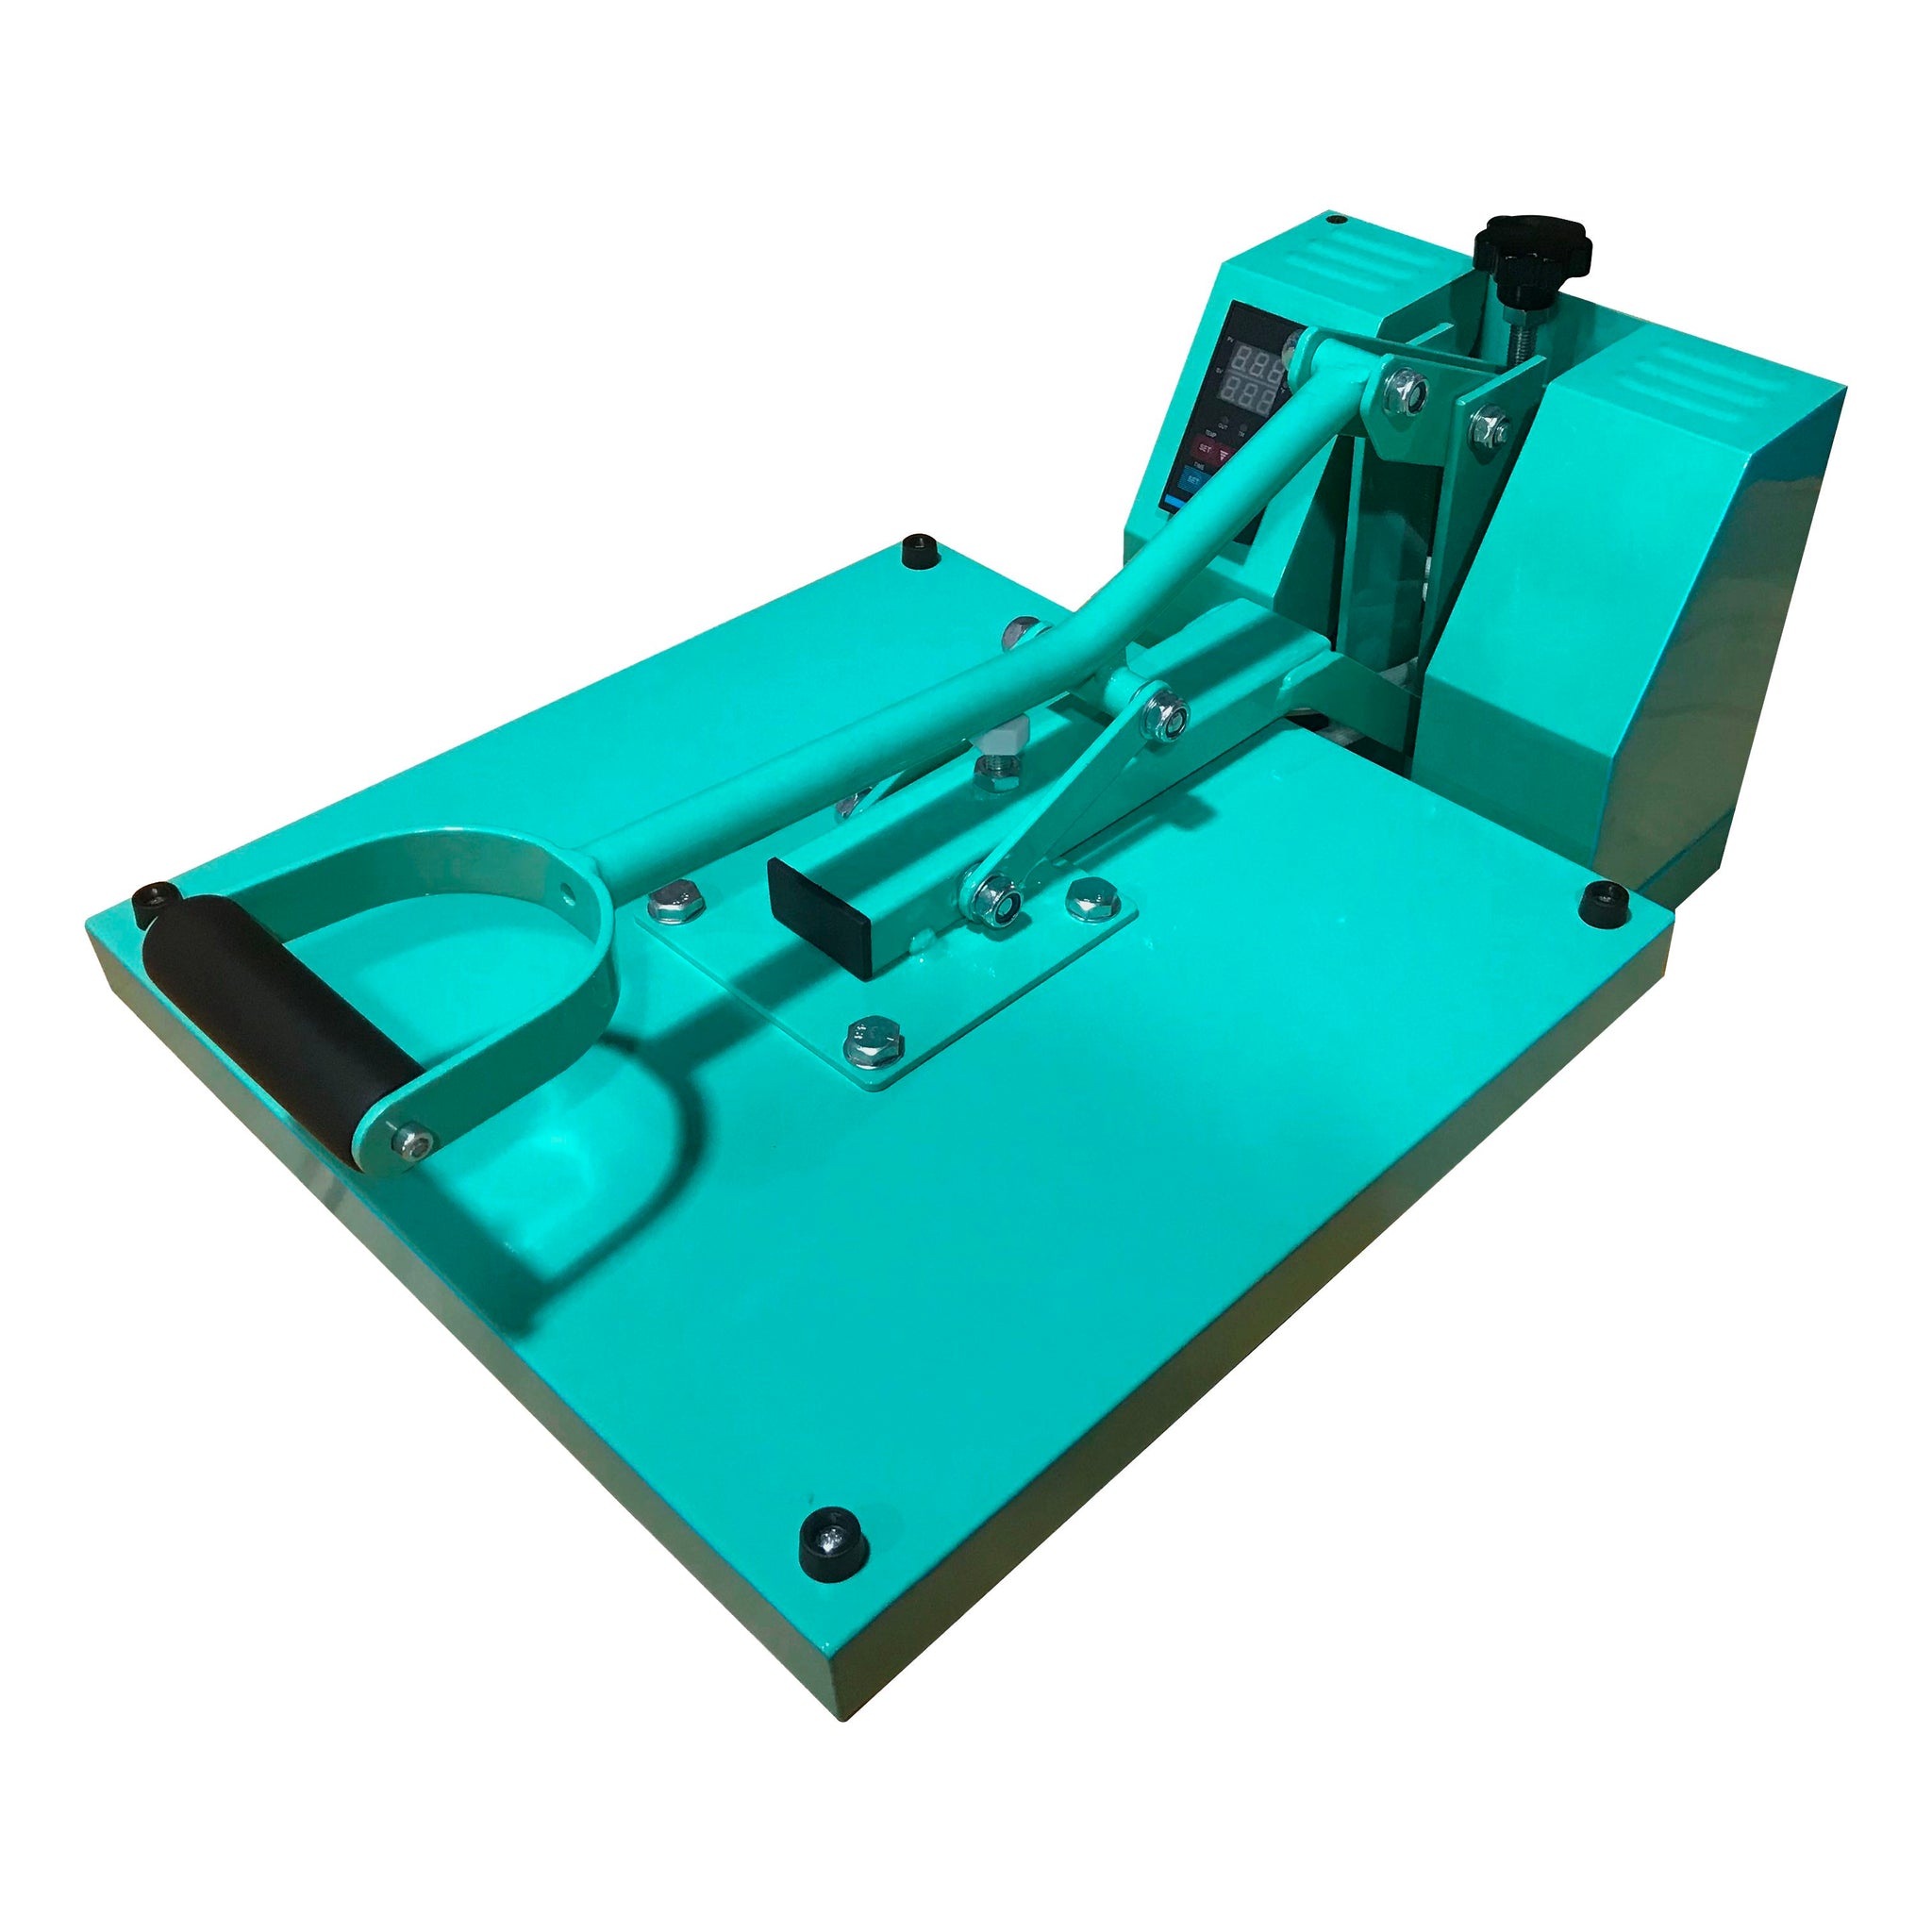 Hix SwingMan 15 Swing-A-Way Heat Press 15x15 — Texsource Screen Printing  Supply